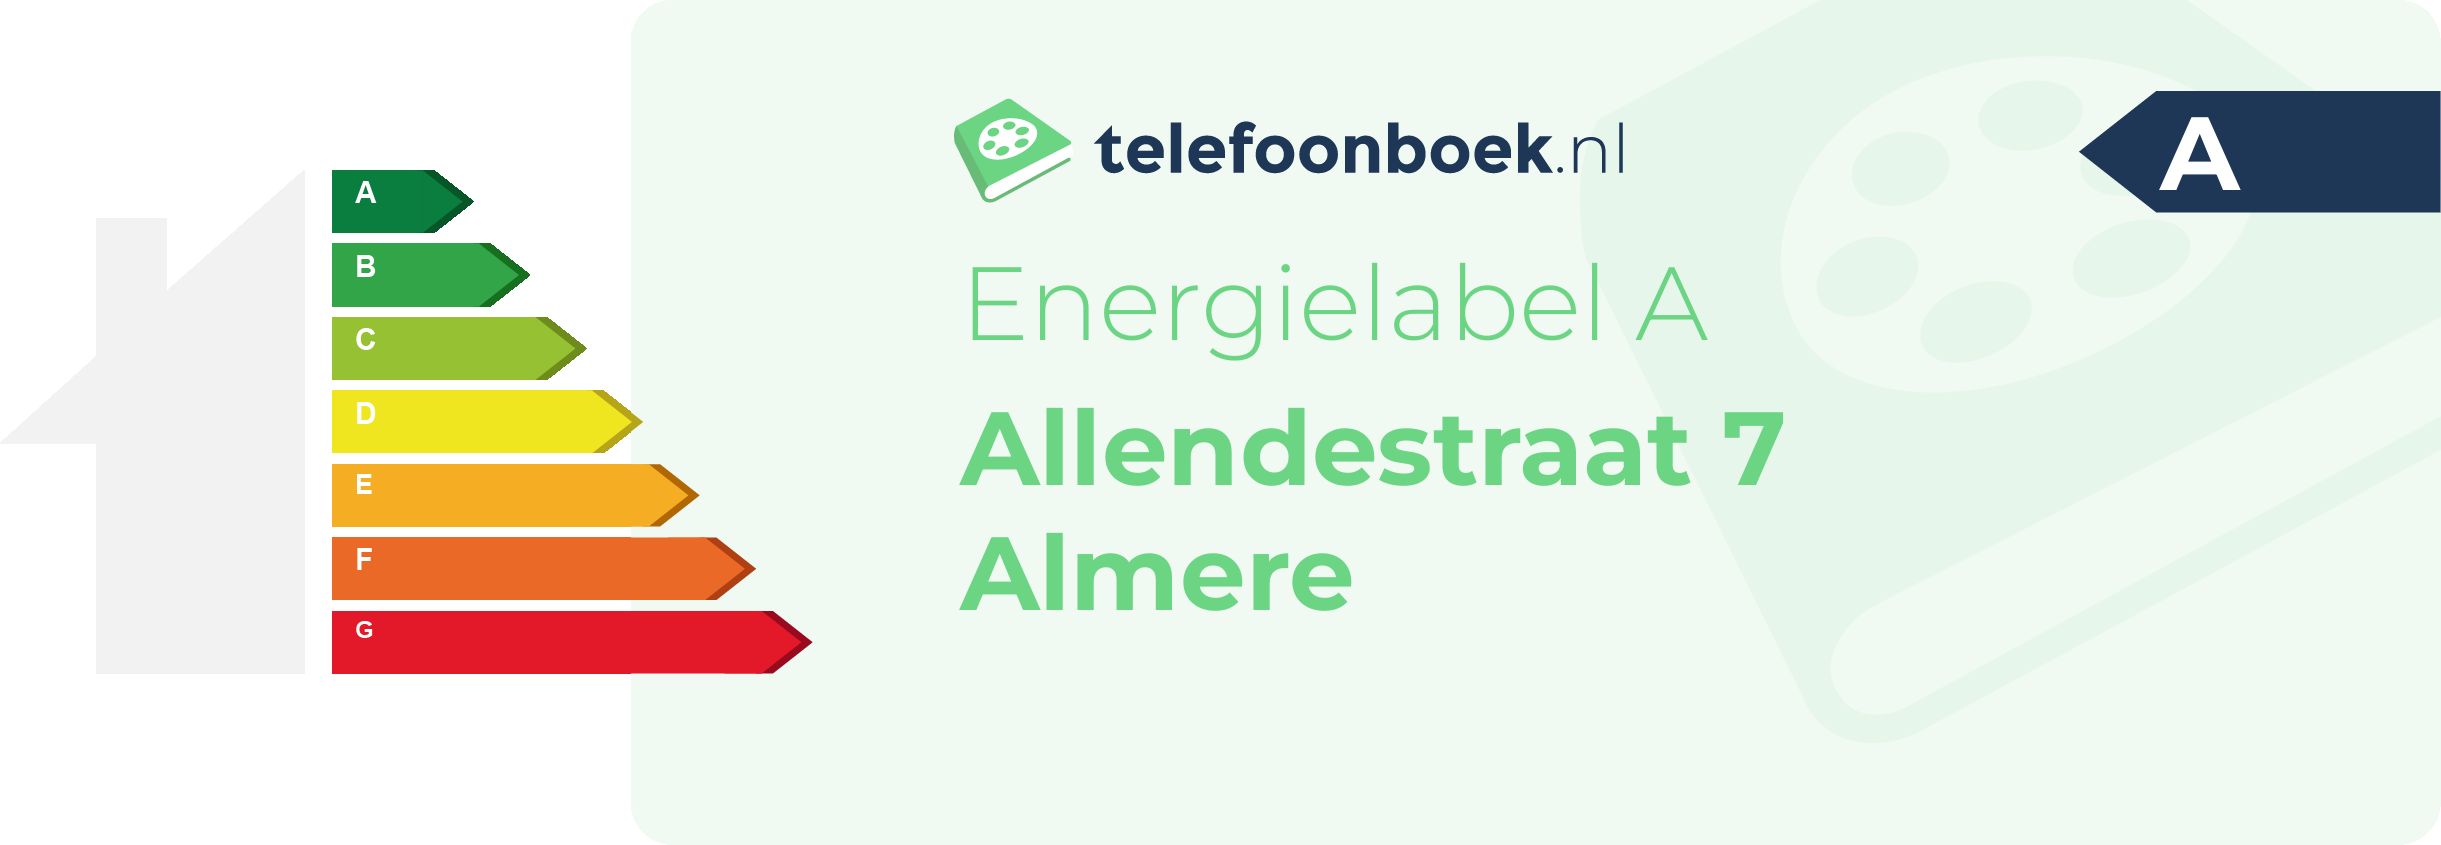 Energielabel Allendestraat 7 Almere